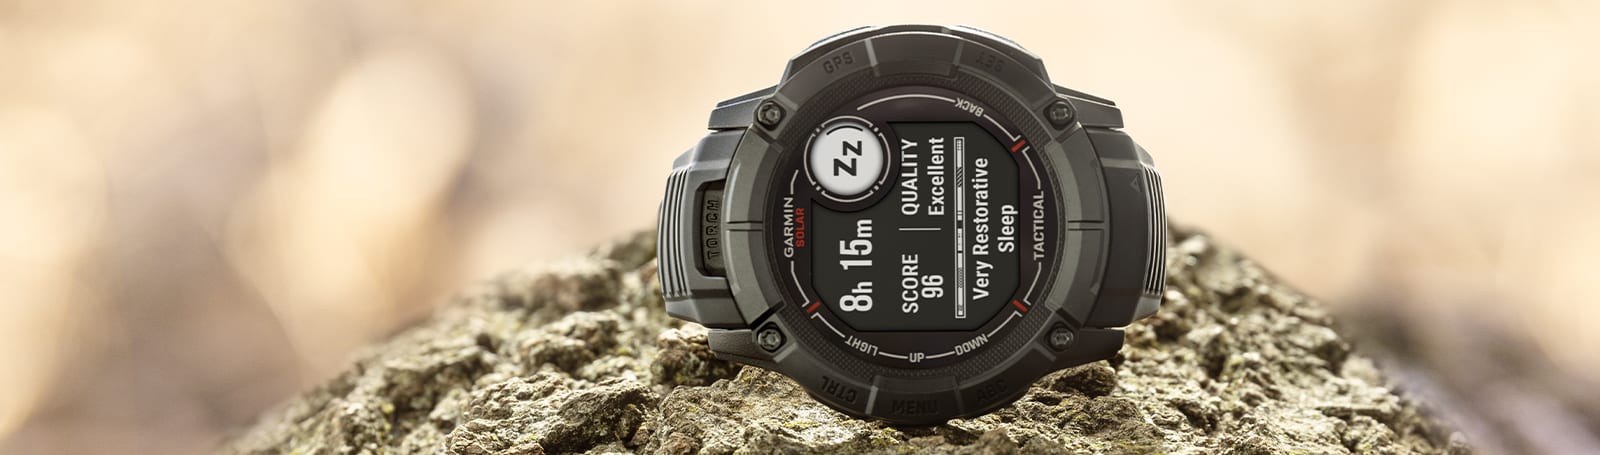 Garmin Instinct 2X Solar Tactical Rugged GPS Men Smartwatch Black